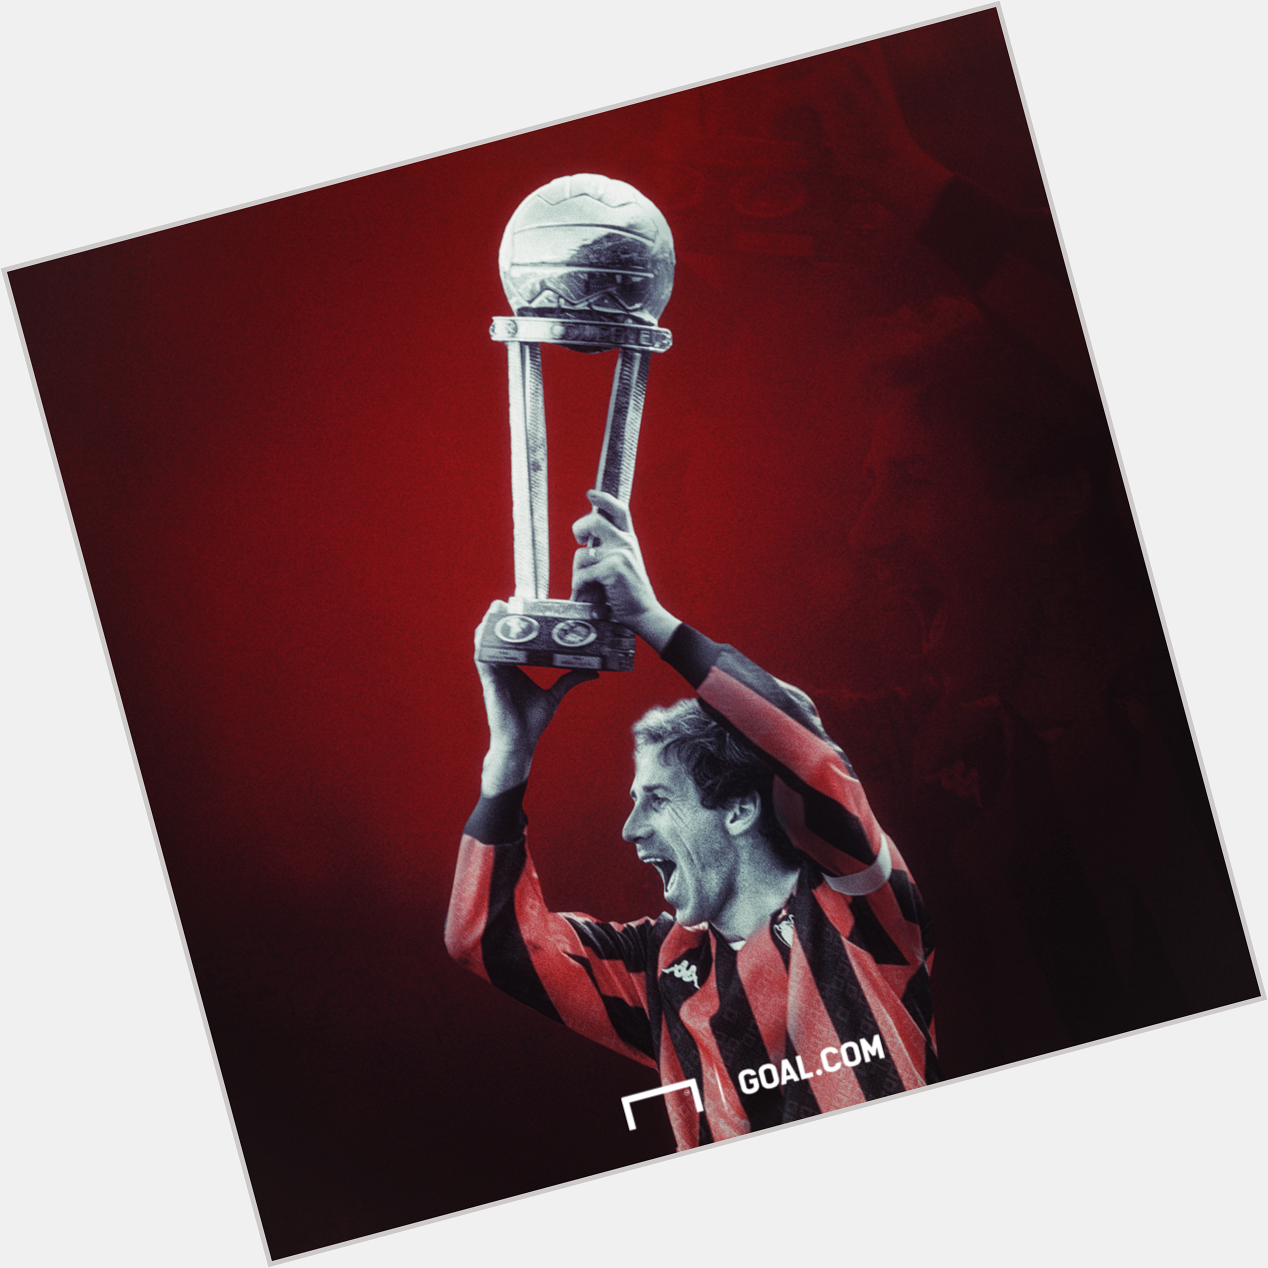  Happy 57th birthday to AC Milan legend Franco Baresi!   